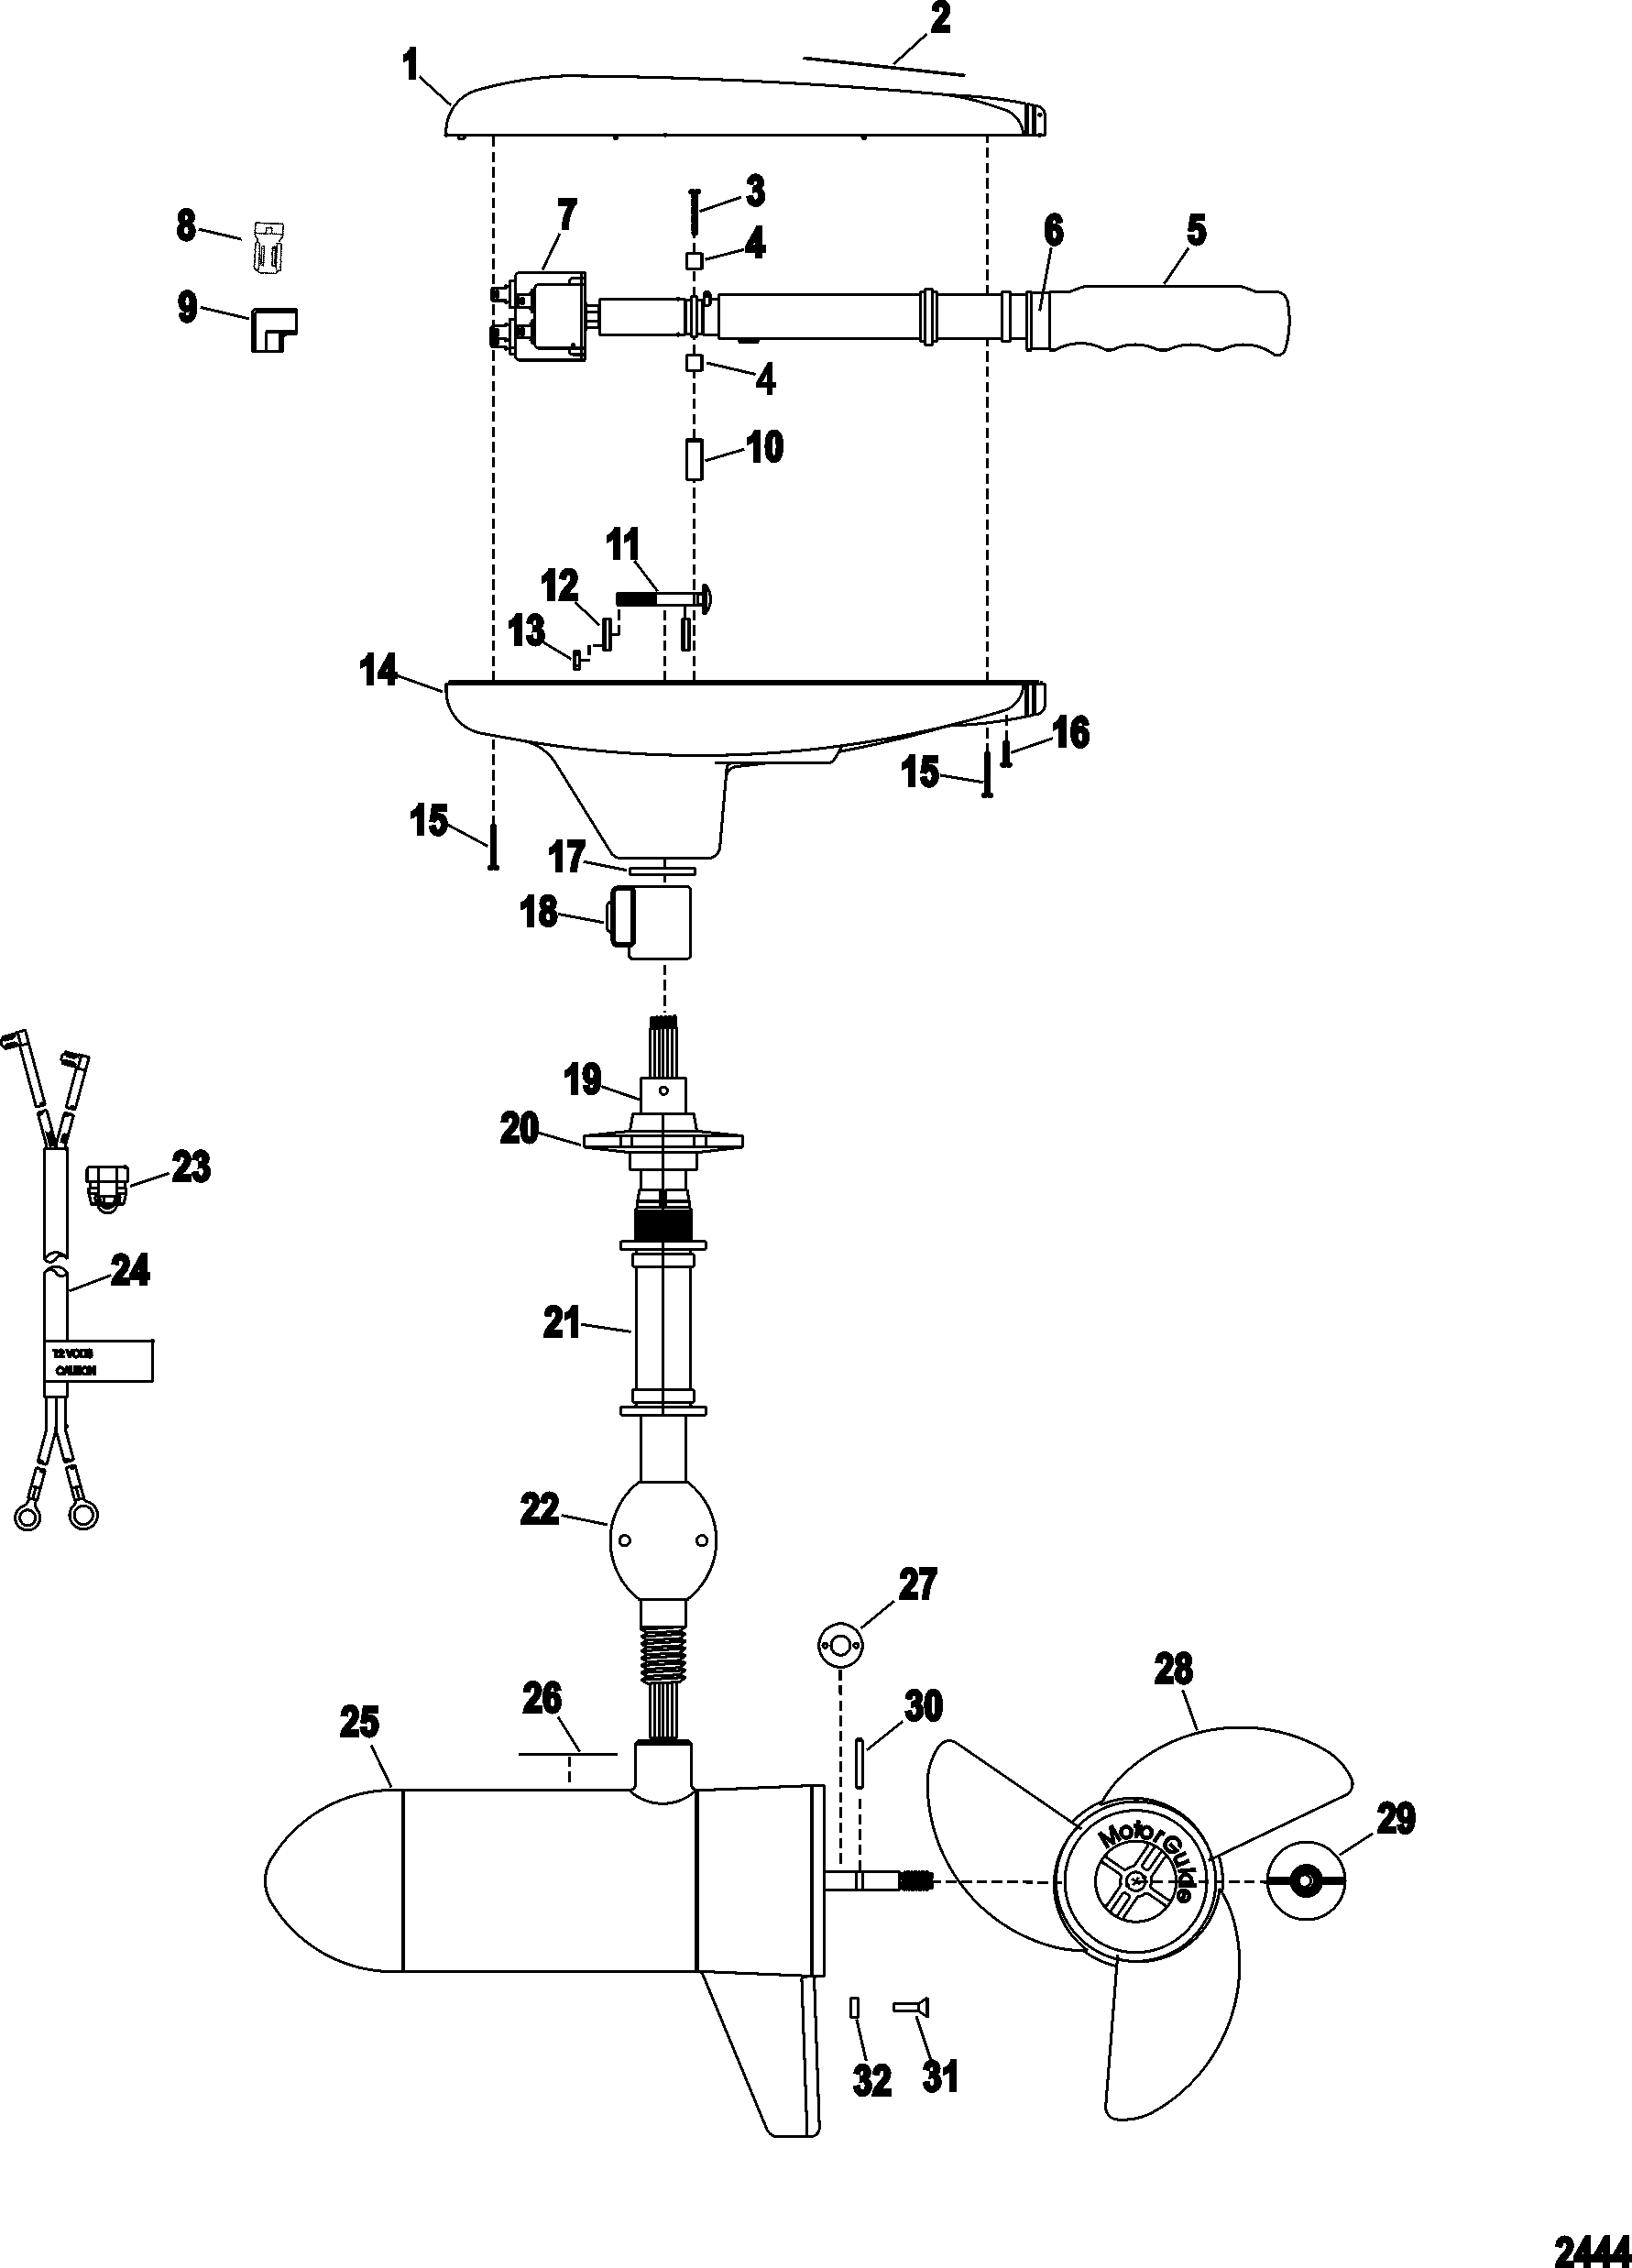 9ct63lqax trolling motorguide wiring diagram